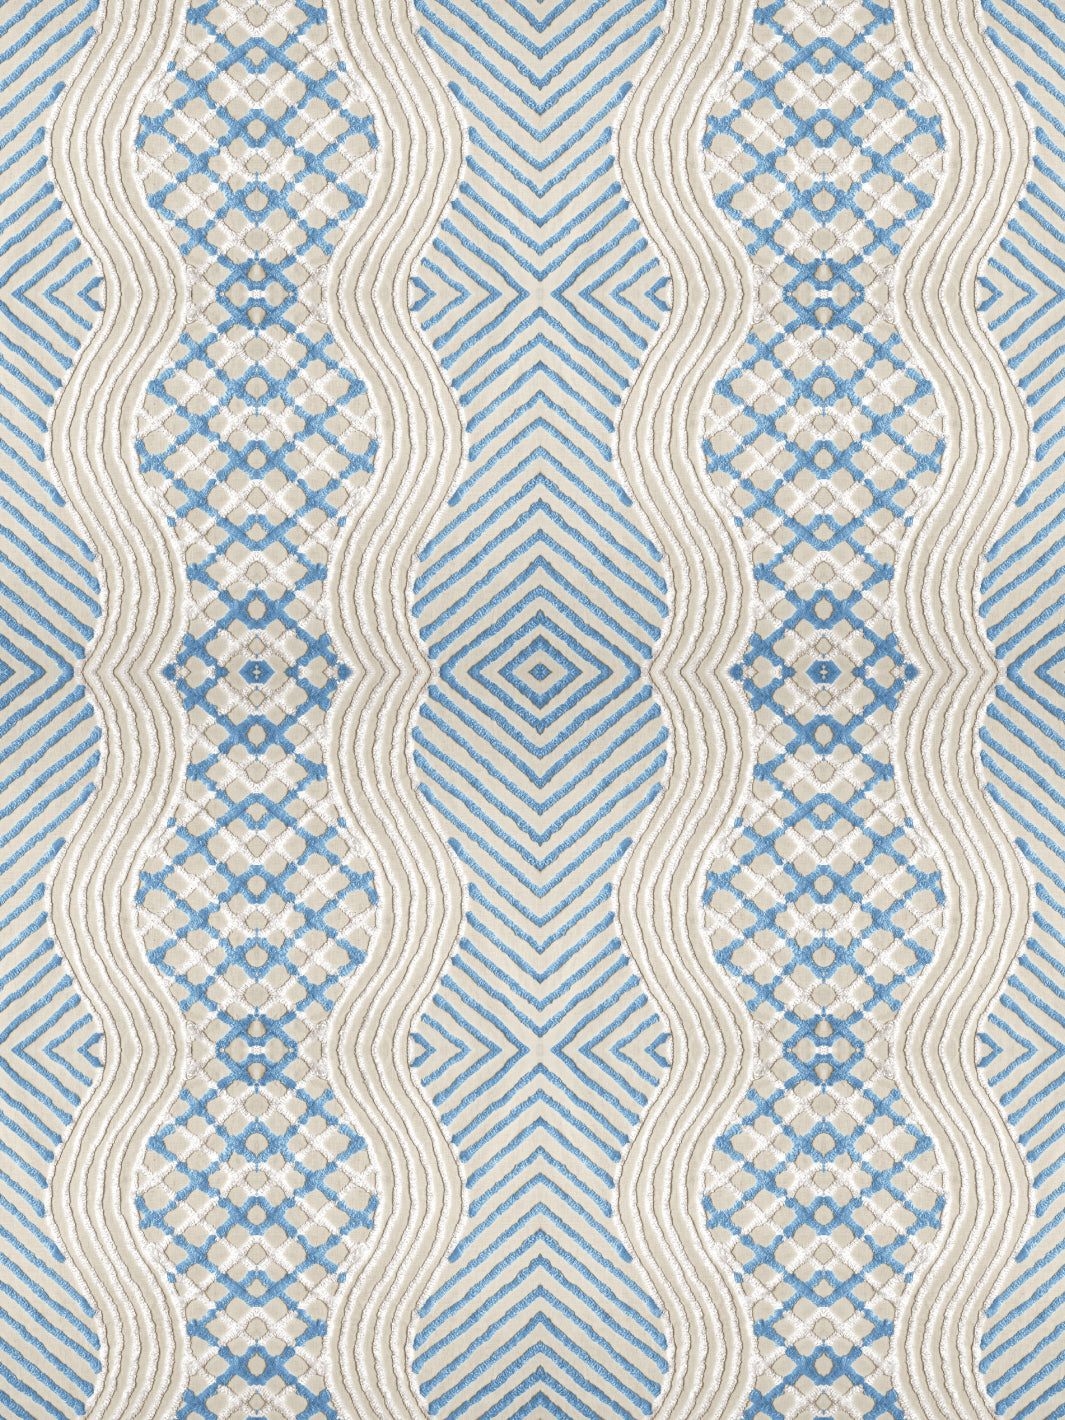 'Chenille Stripe' Wallpaper by Chris Benz - Blue